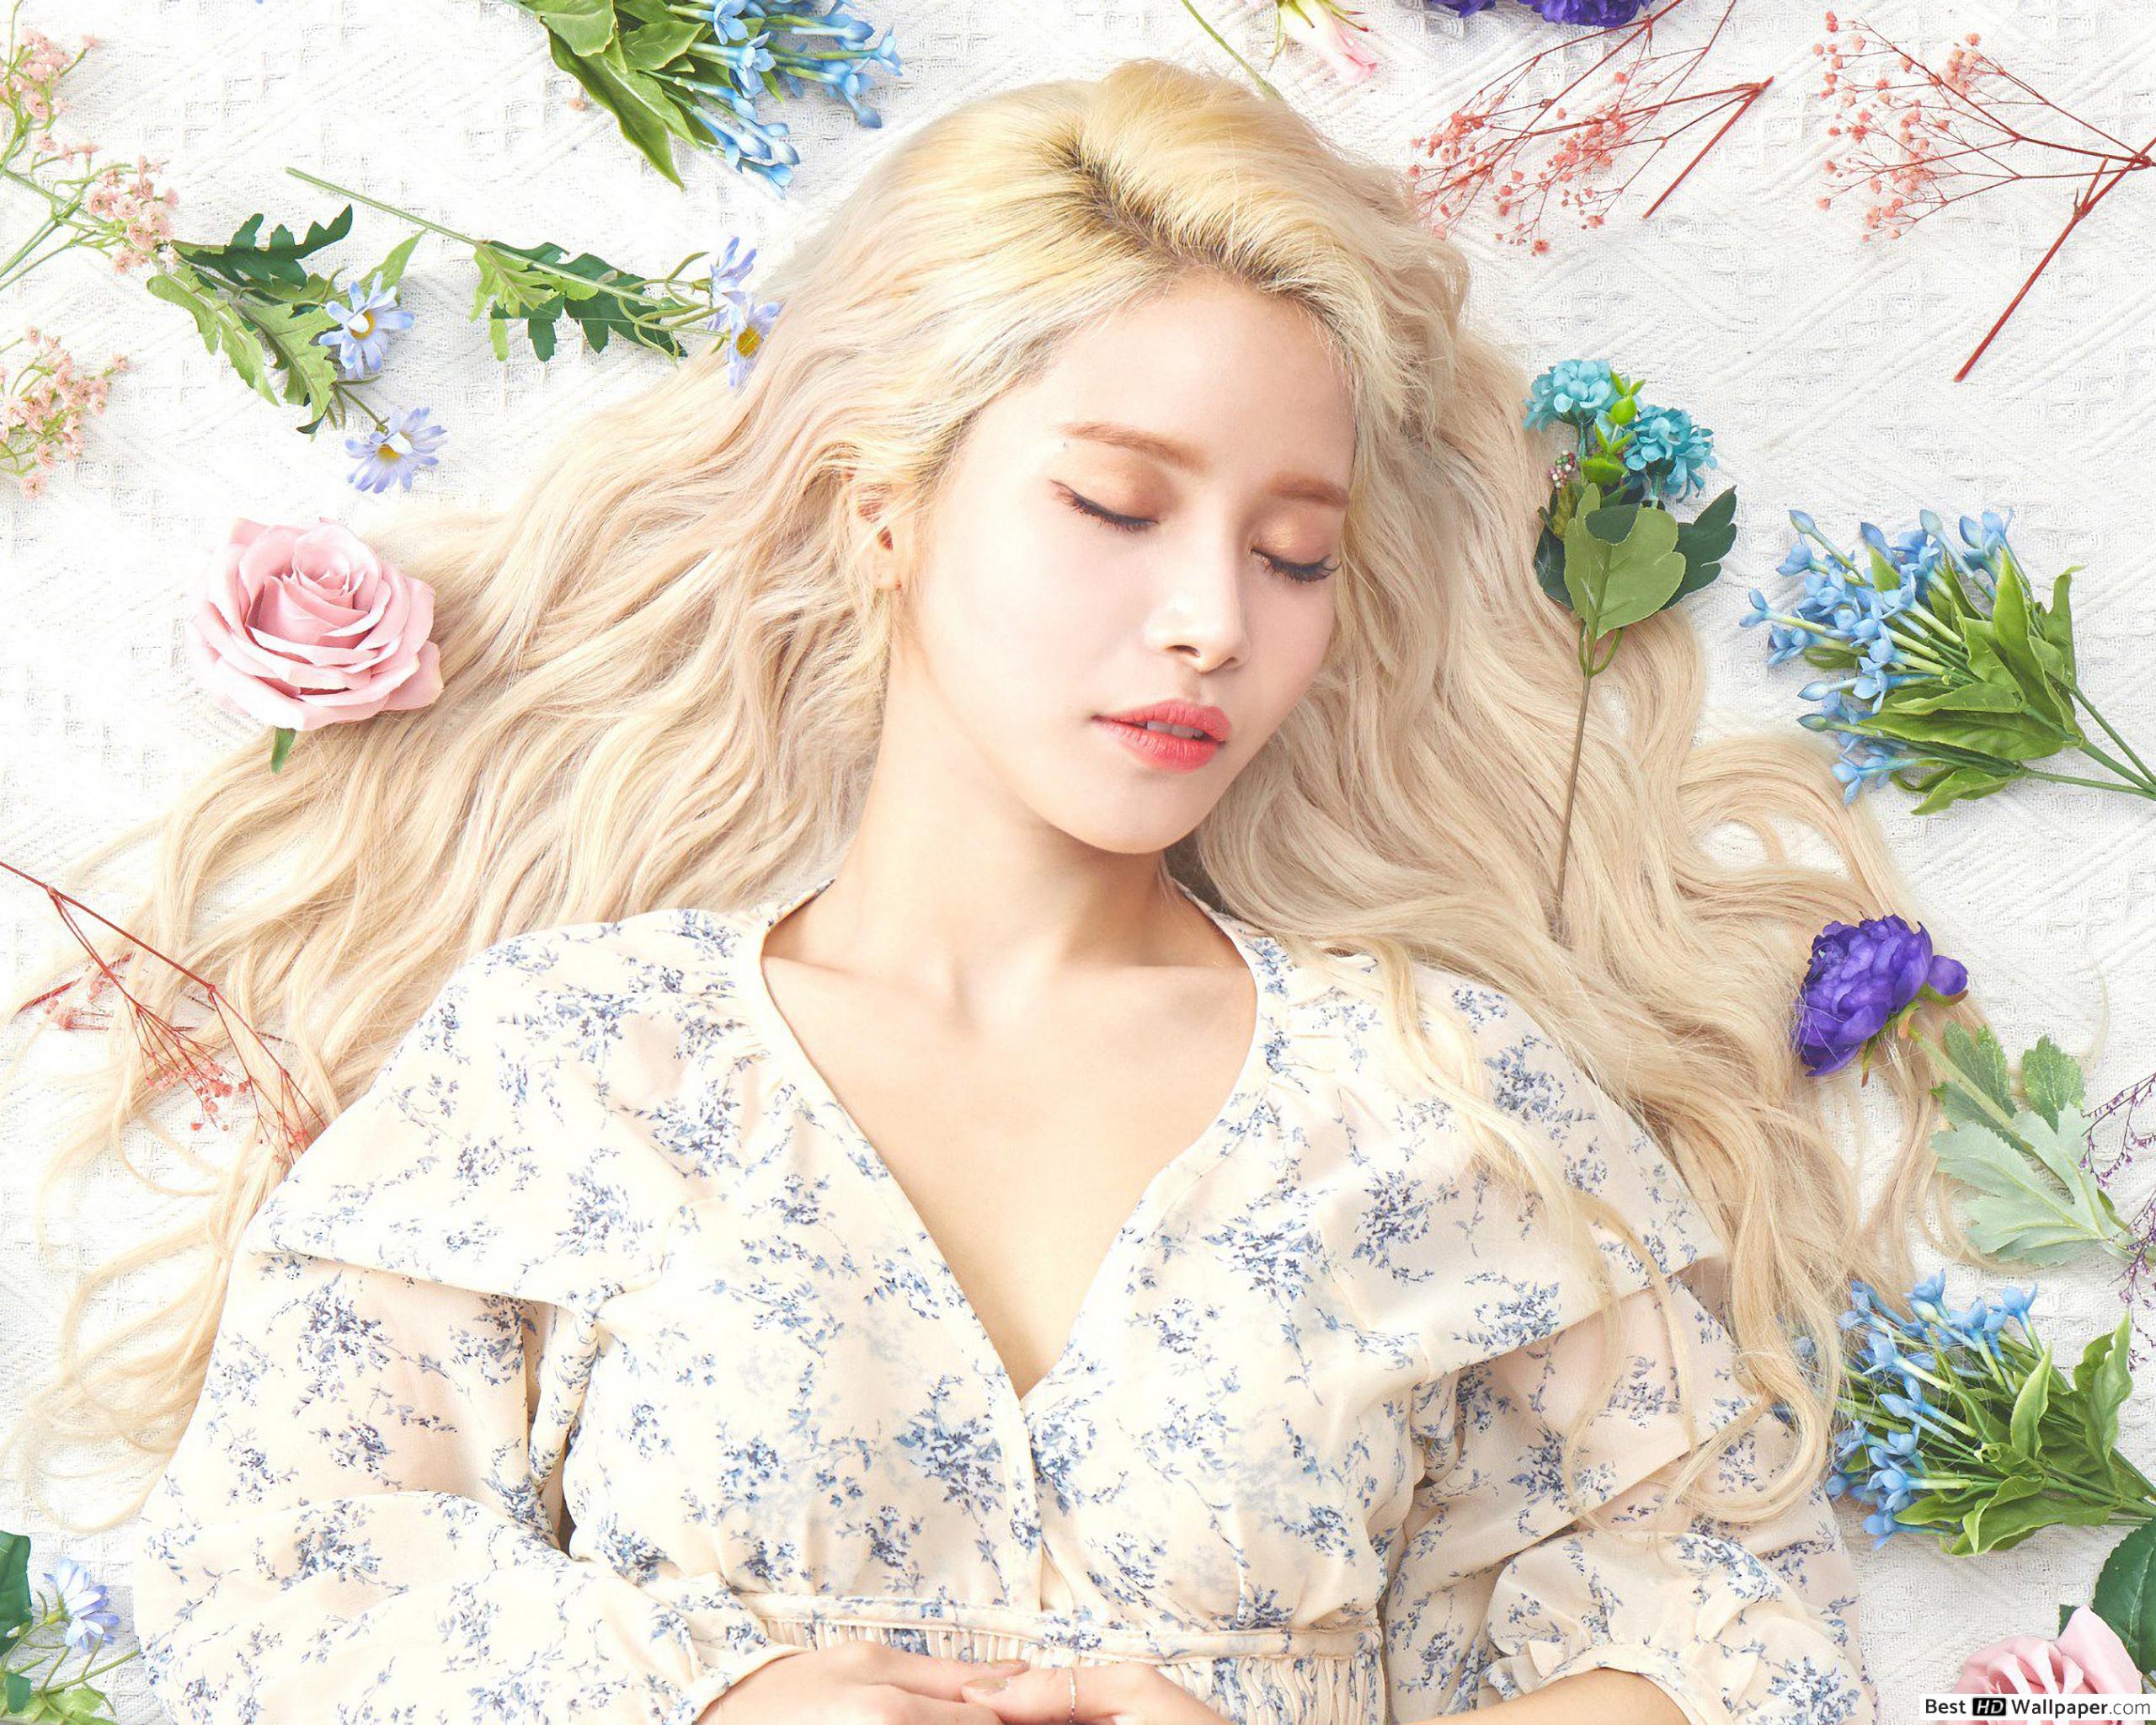 Sleeping Beauty 'Solar' From Mamamoo (K Pop Band) HD Wallpaper Download